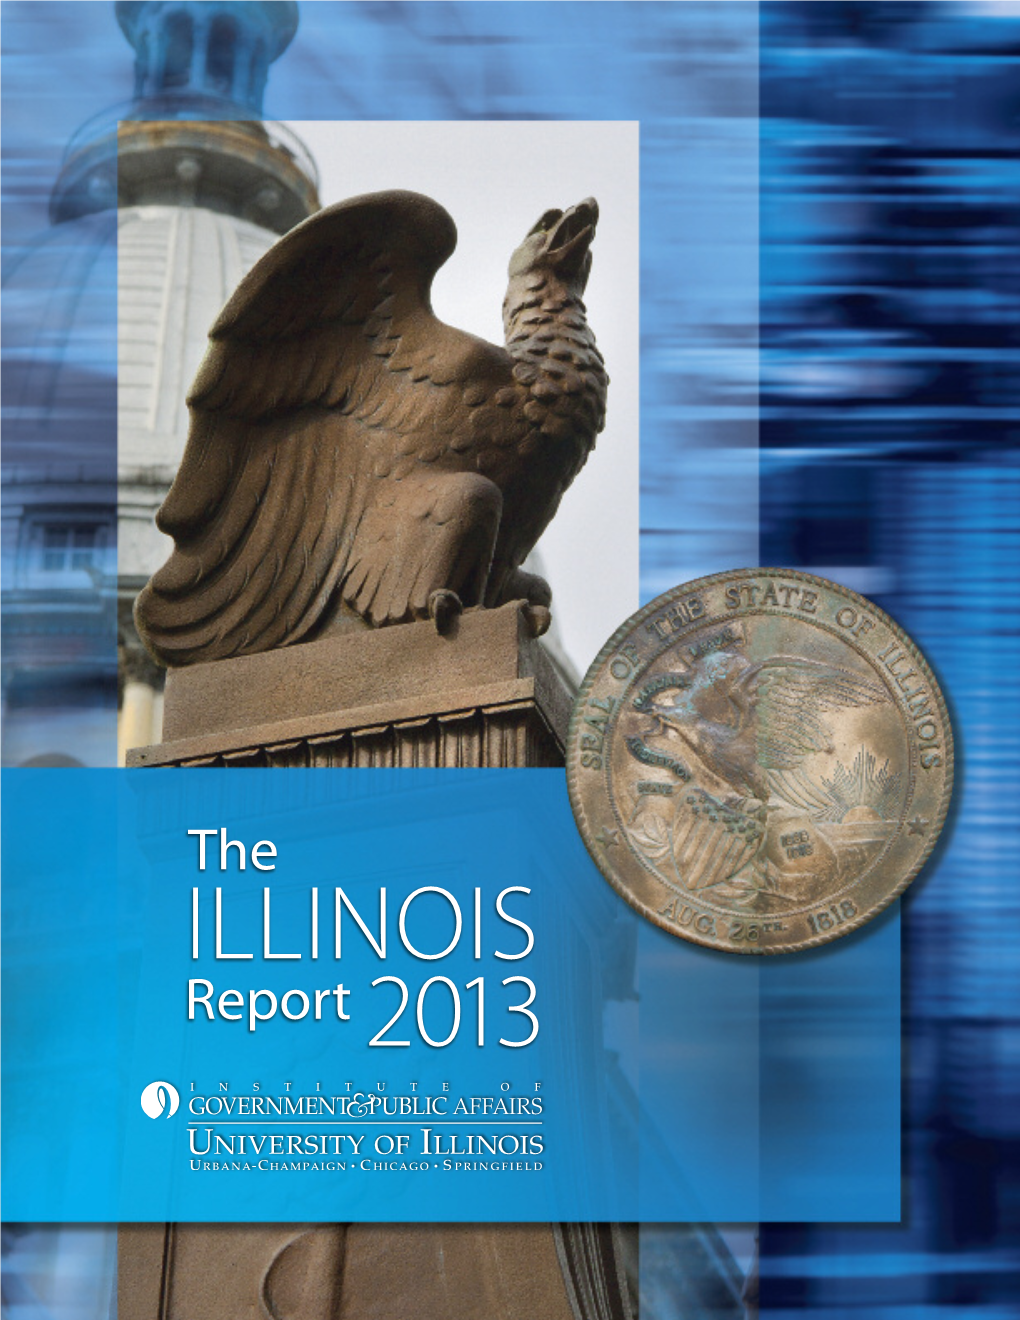 ILLINOIS Report 2013 2 the Illinois Report 2013 Foreword